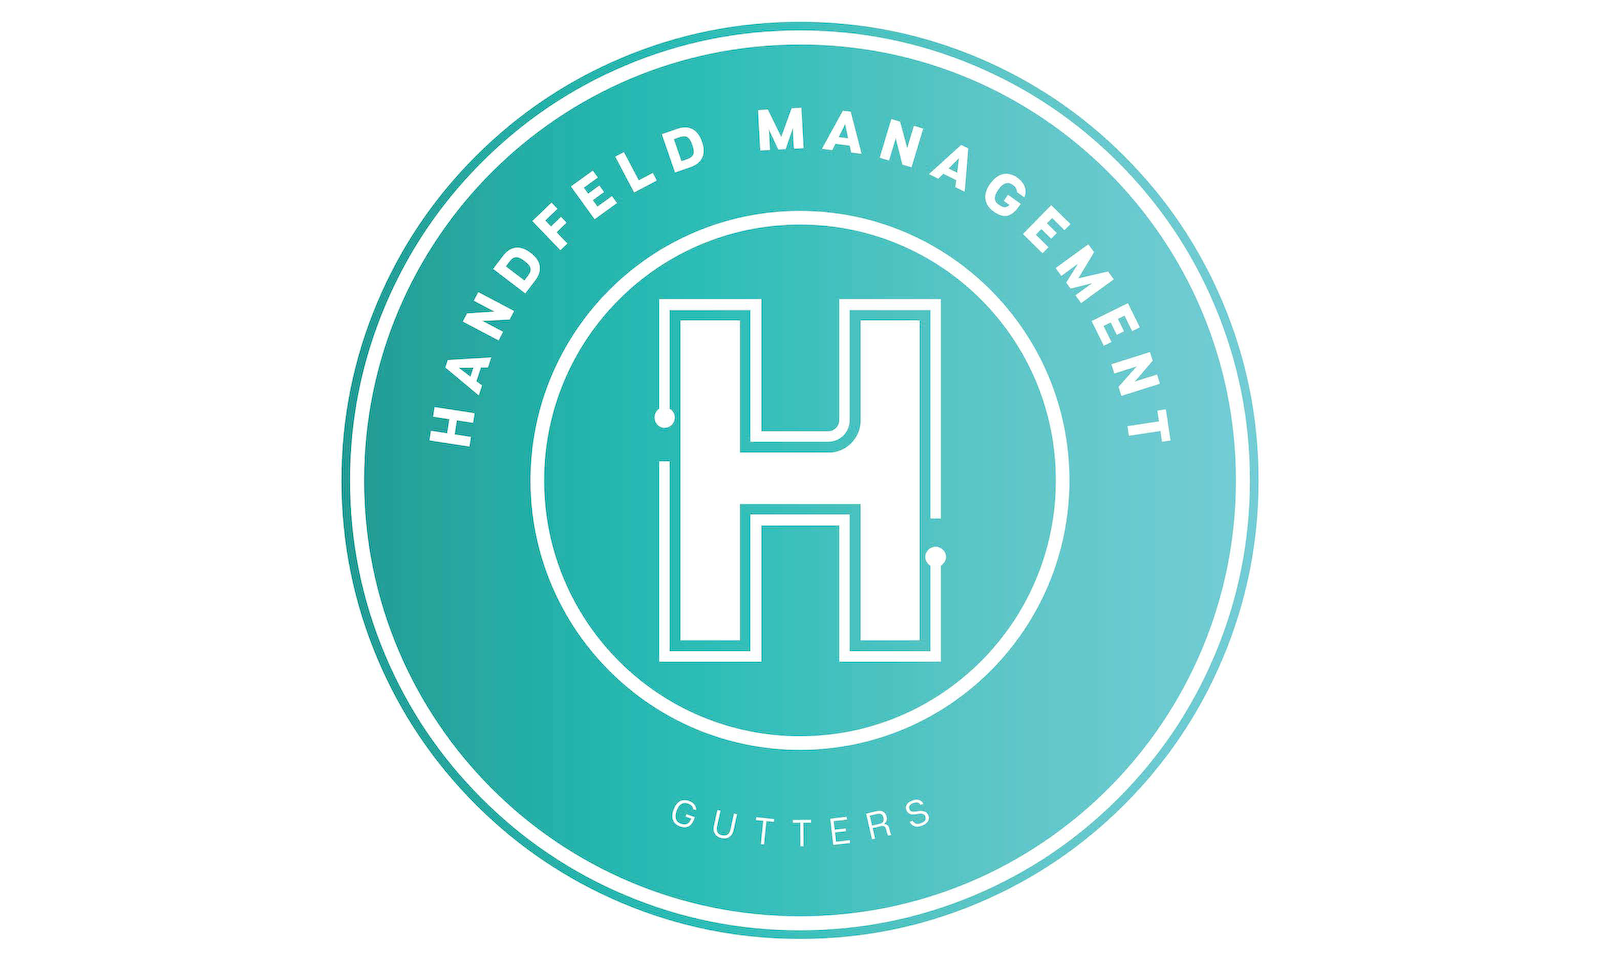 Handfeld Management